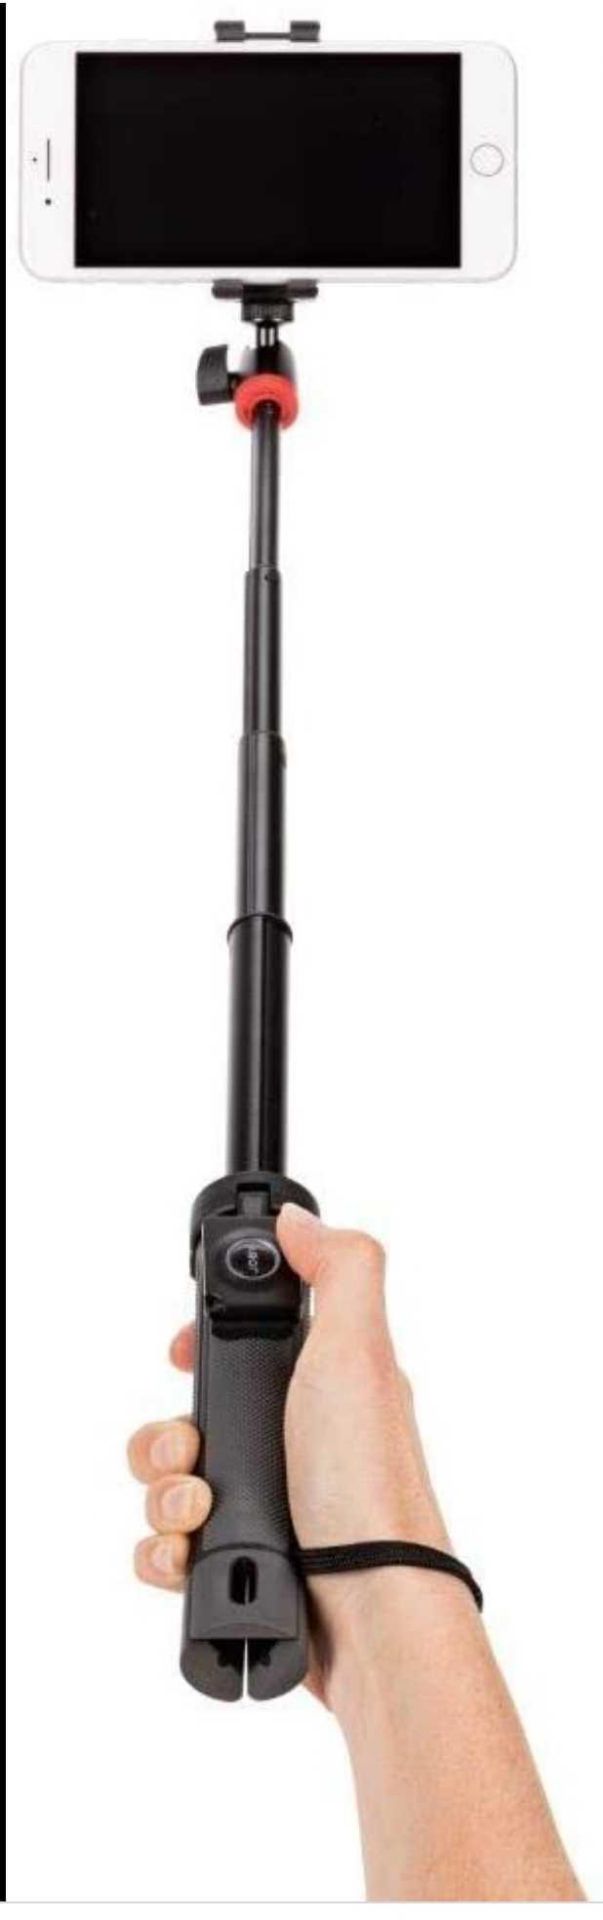 RRP £80 Boxed Joby Telepod Mobile Selfie Stick